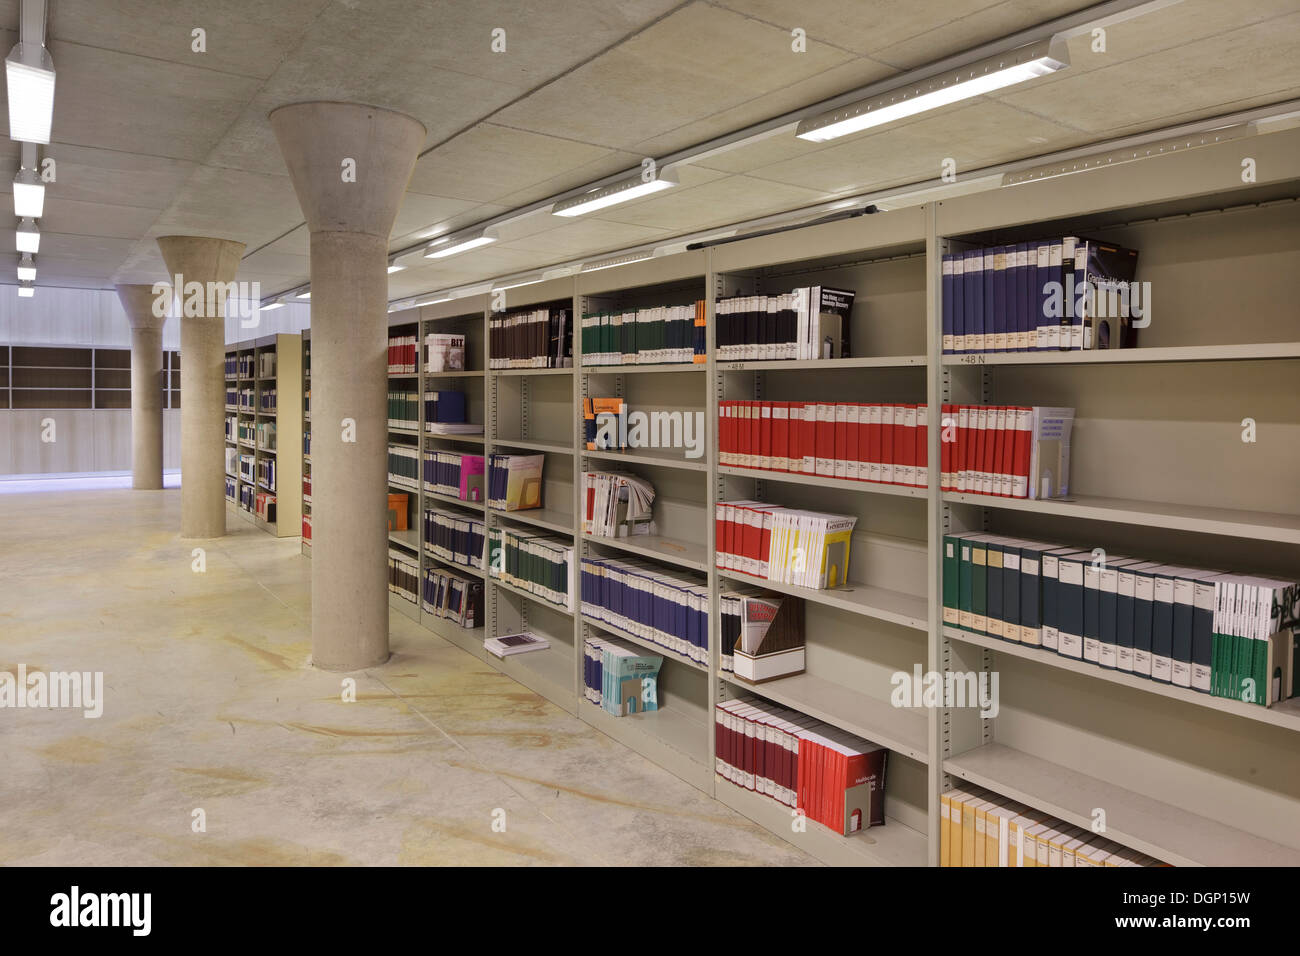 Catholic University of Leuven Arenberg Library, Leuven, Belgium. Architect: Rafael Moneo, 2002. Book shelves on lower ground flo Stock Photo